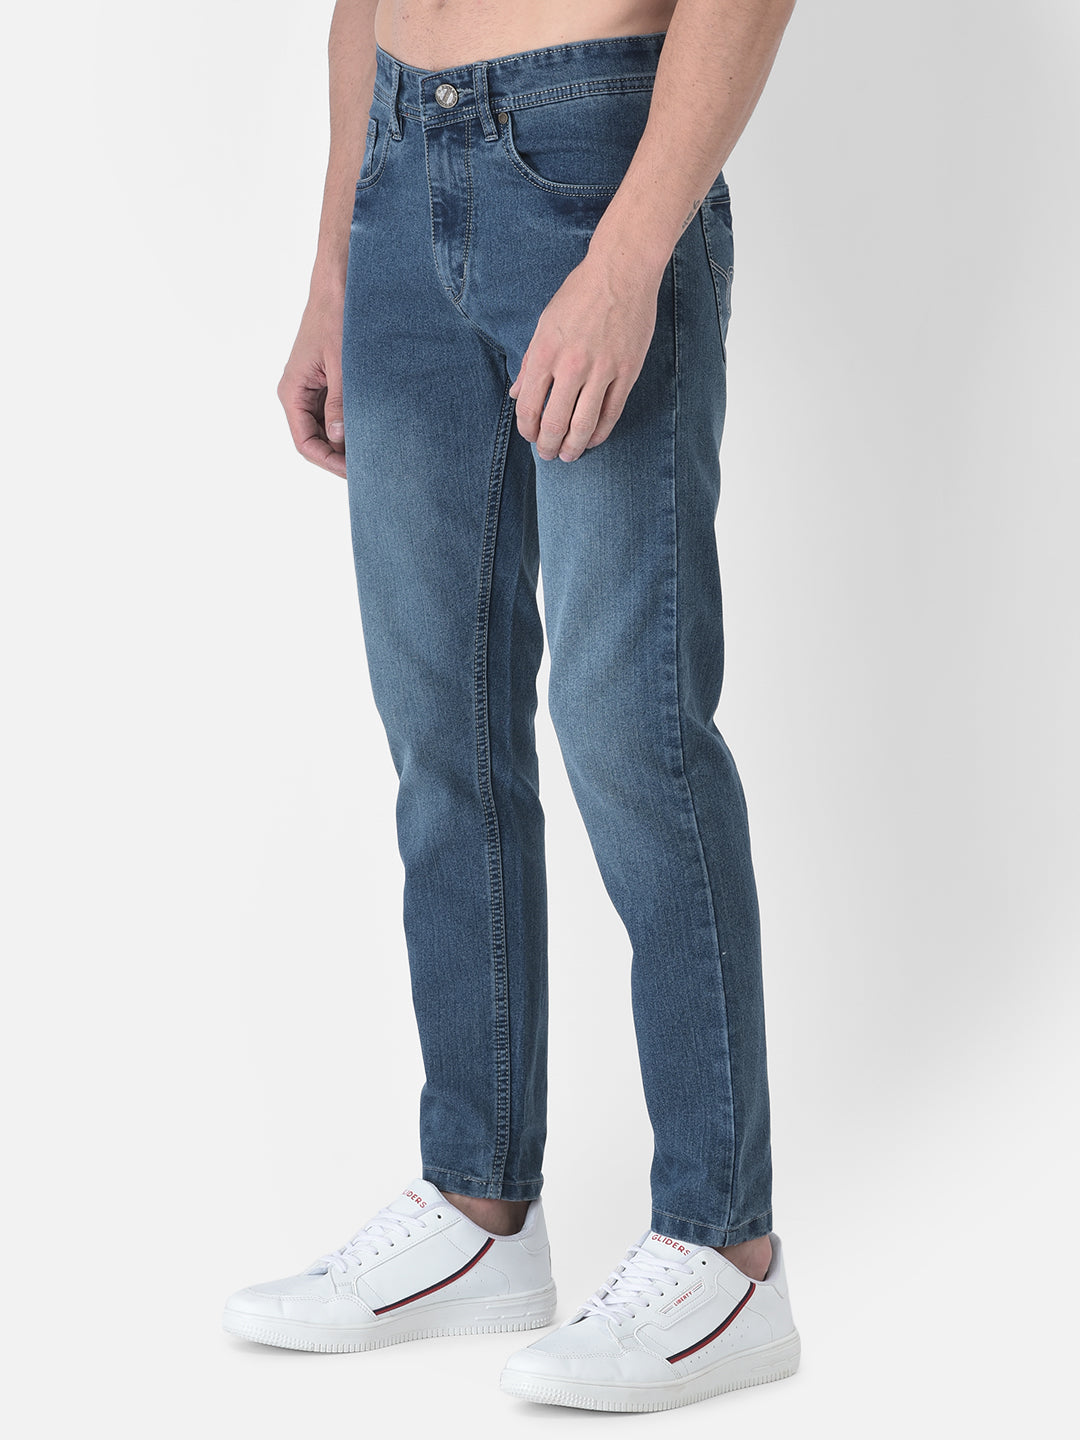 Cobb Tint Blue Narrow Fit Jeans